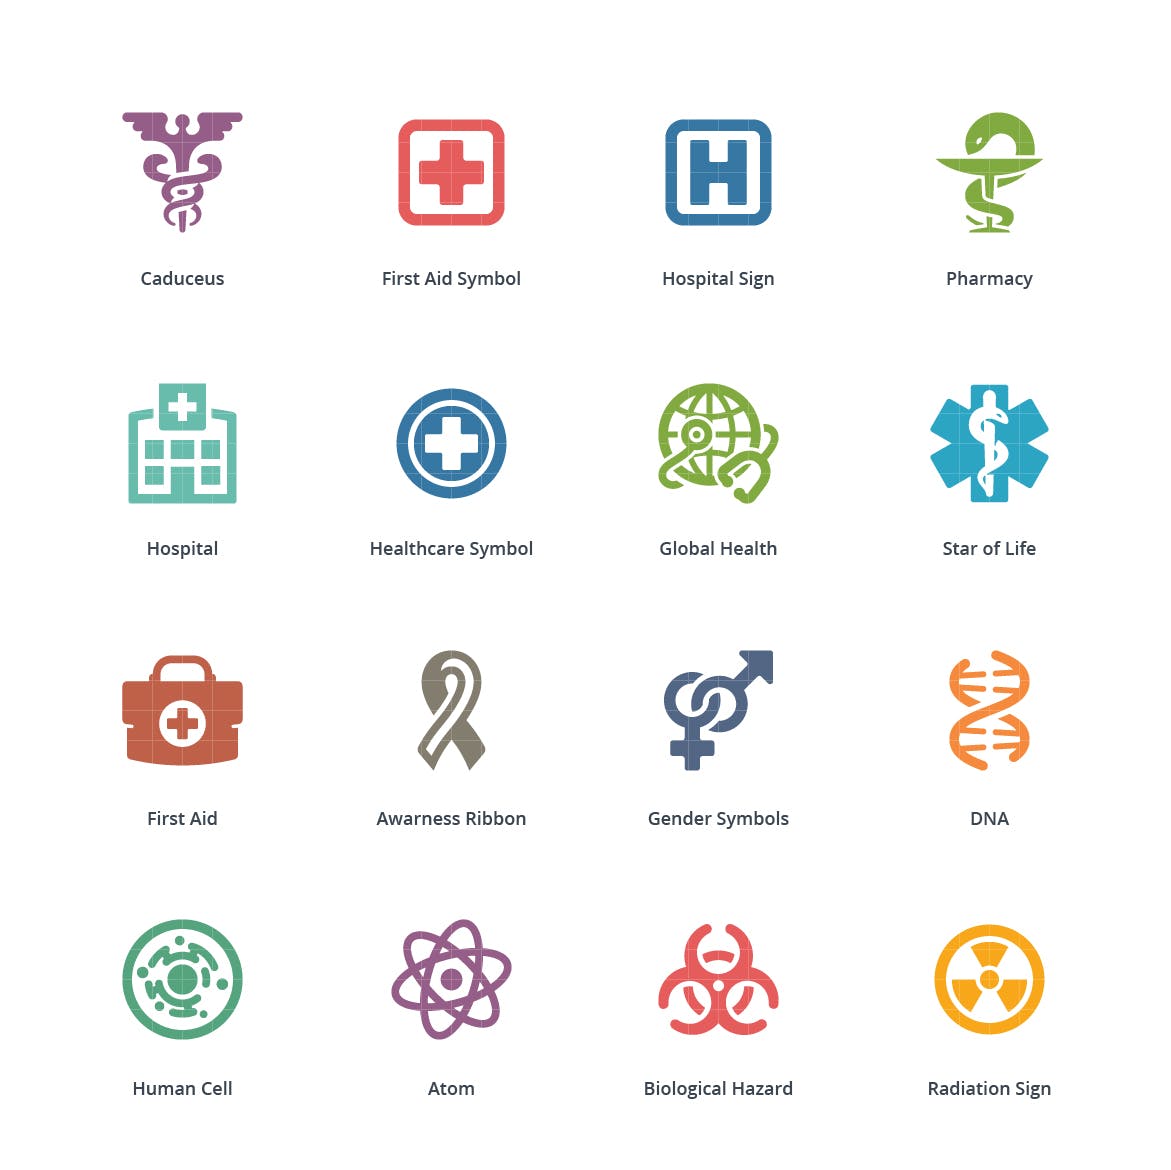 Colored系列-医疗保健主题矢量第一素材精选图标集v1 Medical & Health Care Icons Set 1 – Colored Series插图(1)